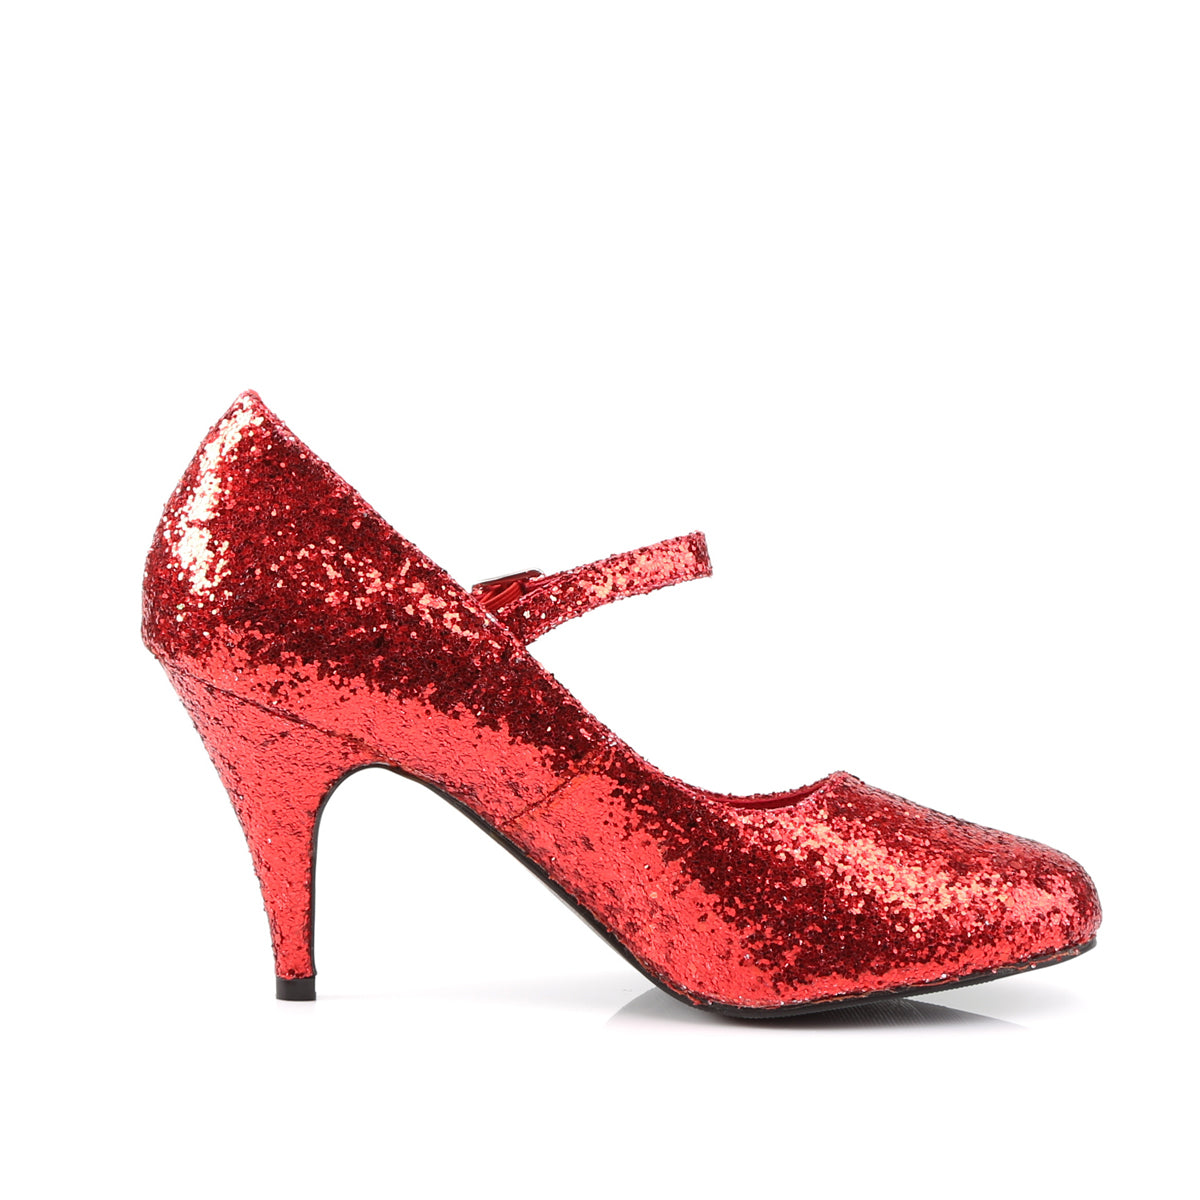 GLINDA-50G 3" Heel Red Glitter Women's Costume Shoes Funtasma Costume Shoes Fancy Dress